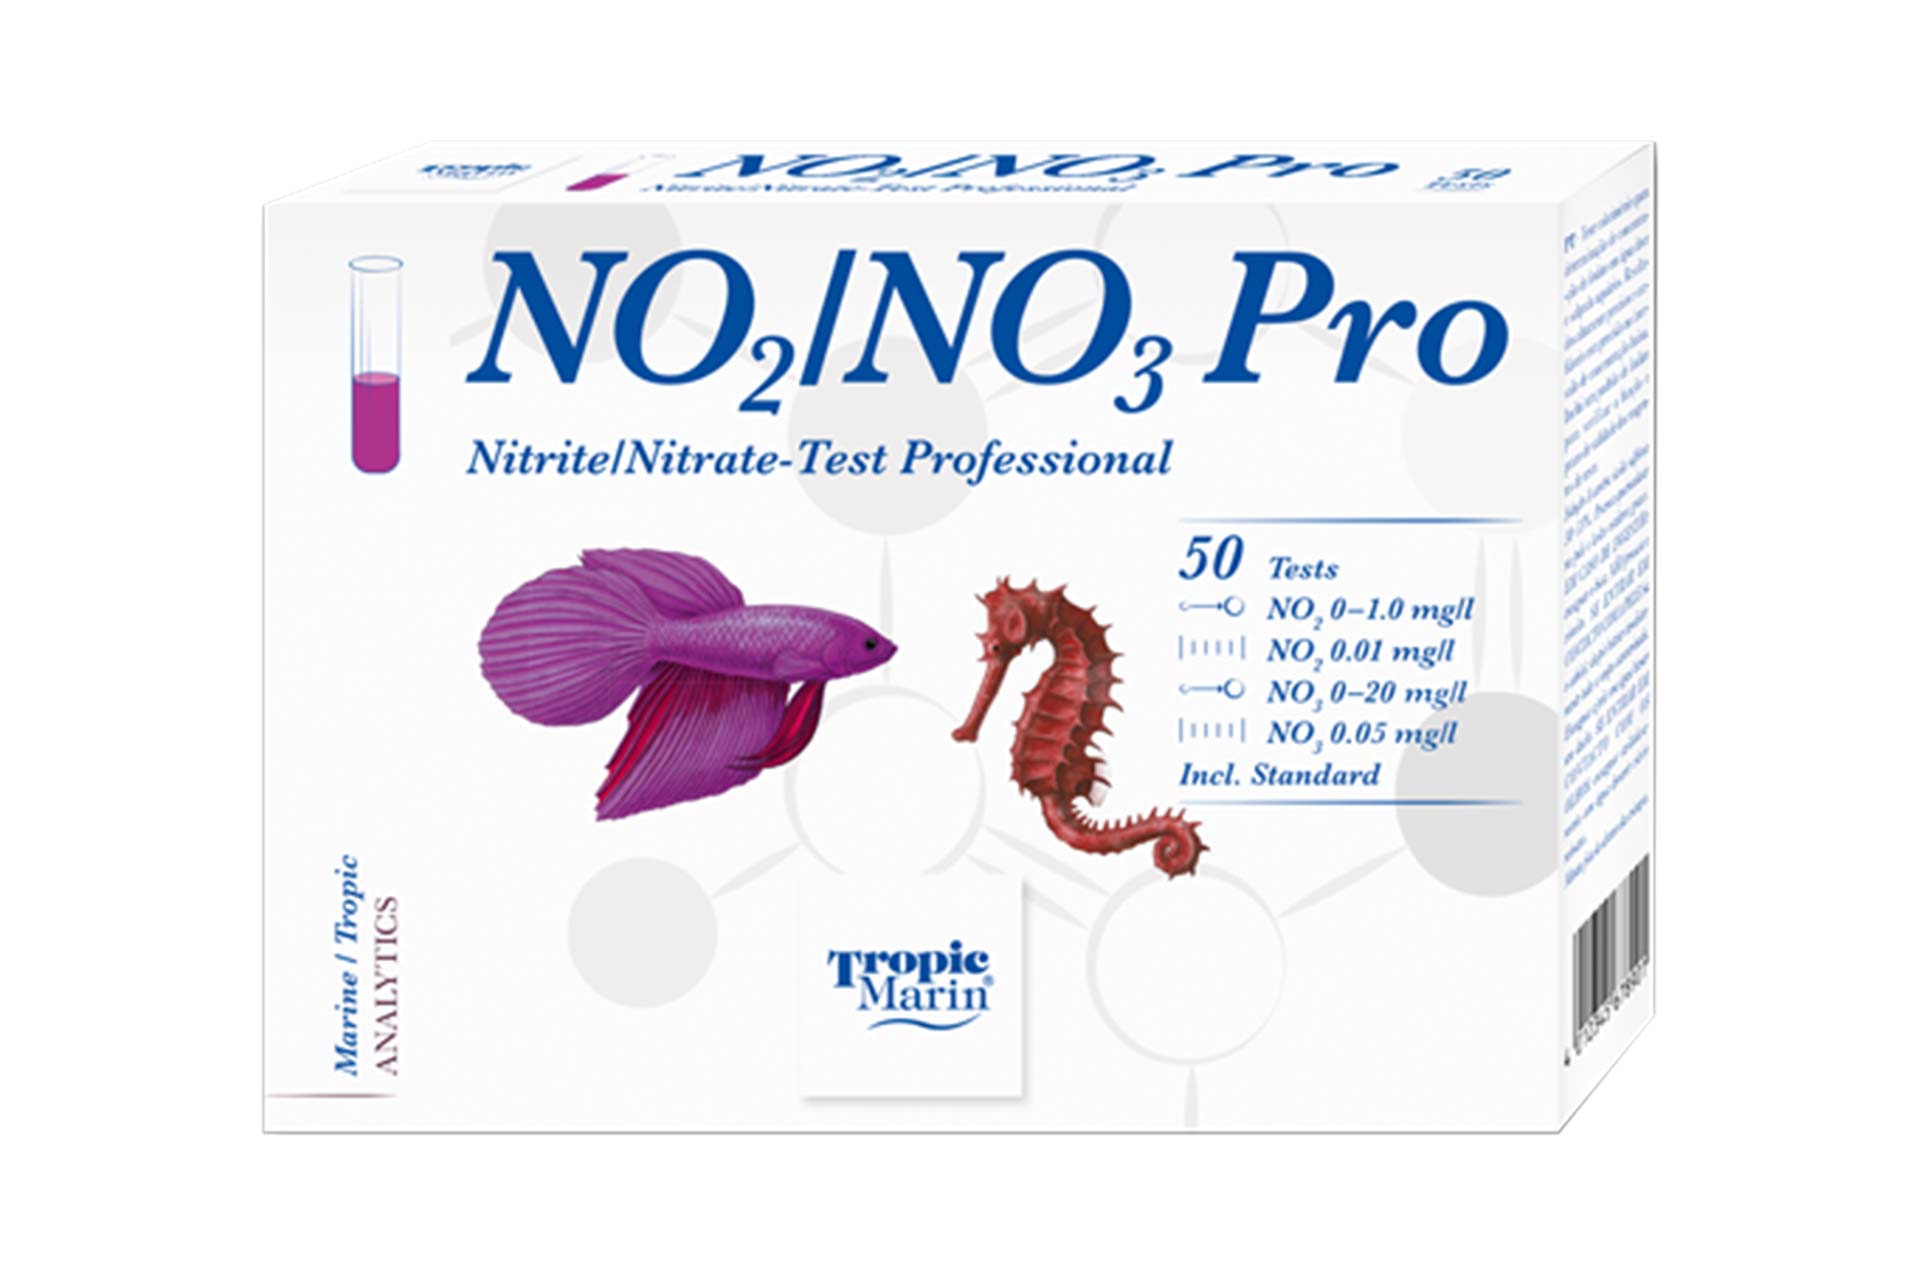 Tropic Marin NO2/NO3 Pro - Nitrit/Nitrat-Test Professional - buy